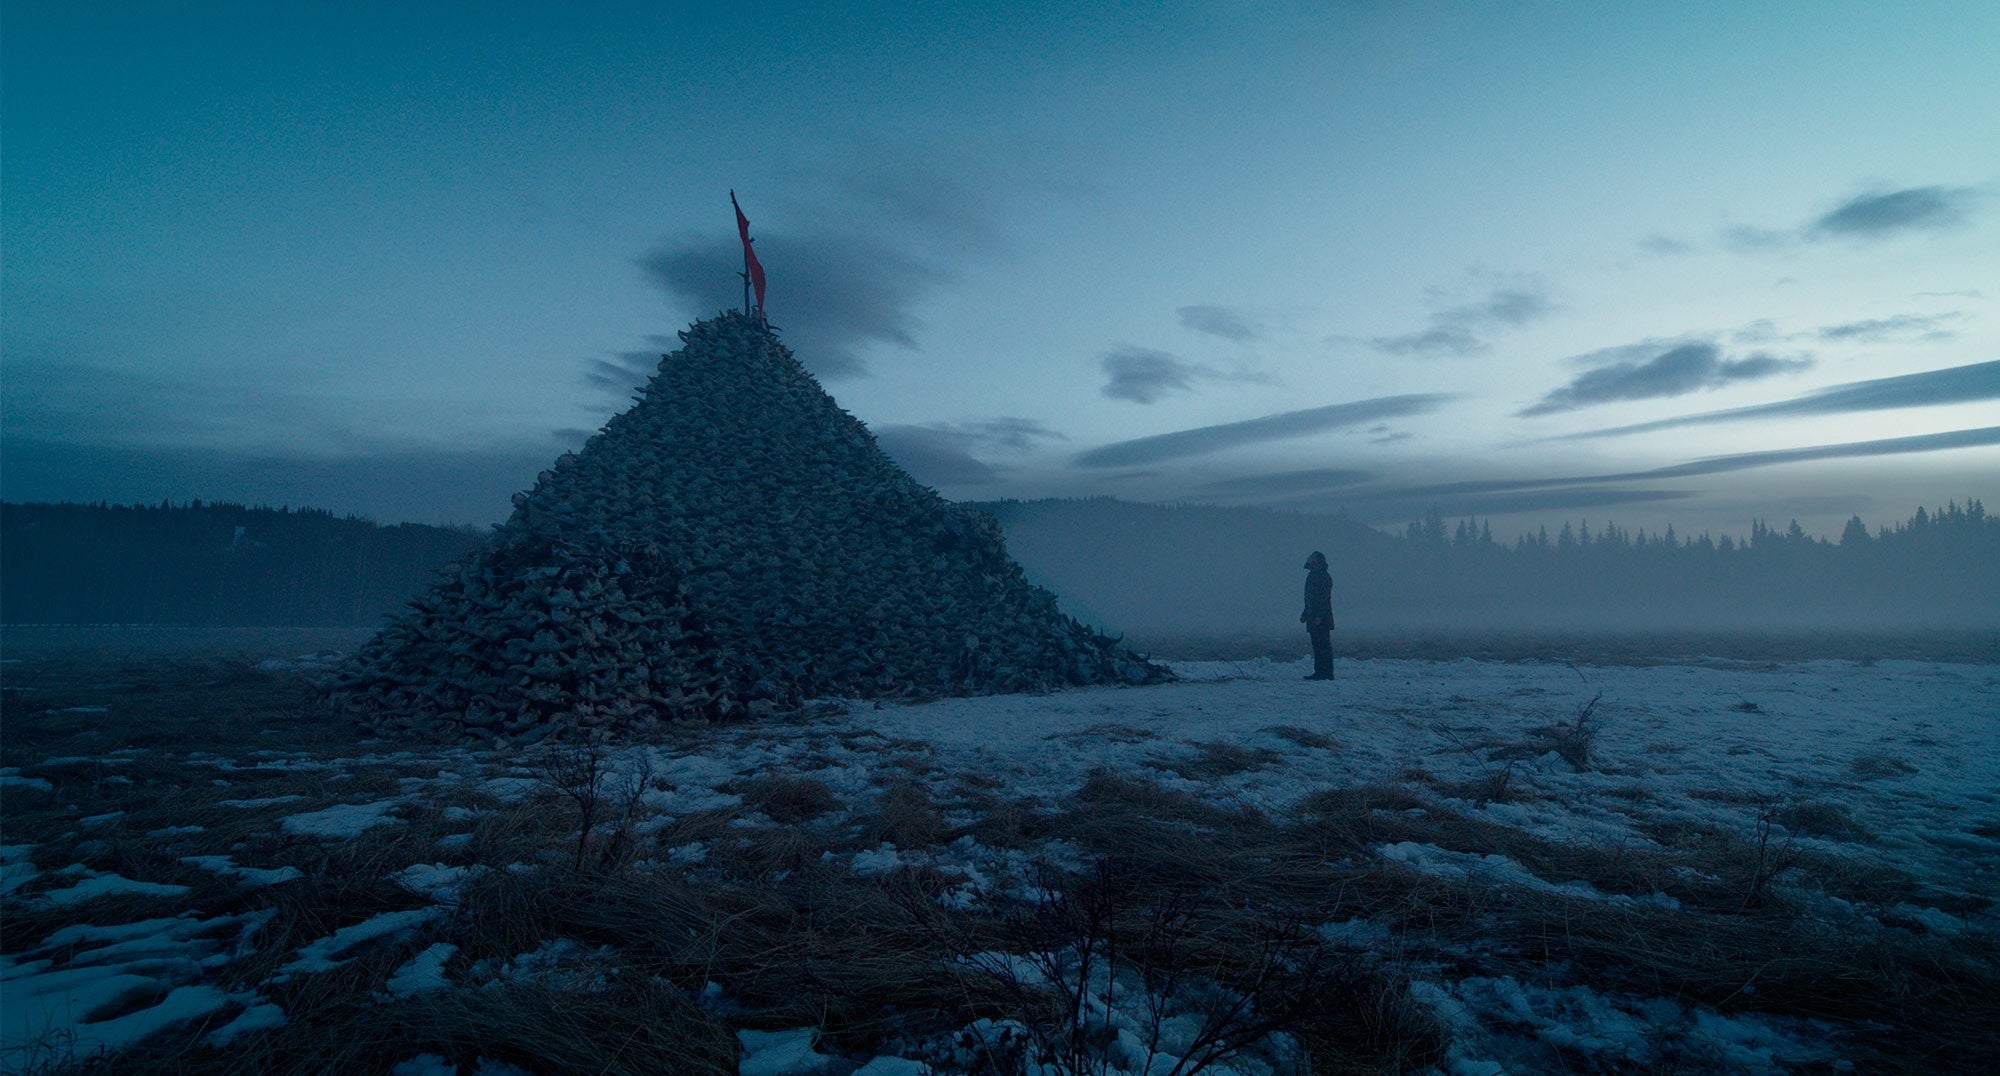 The Revenant, which Emmanuel Lubezki shot digitally using natural light before adding lighting elements in postproduction.